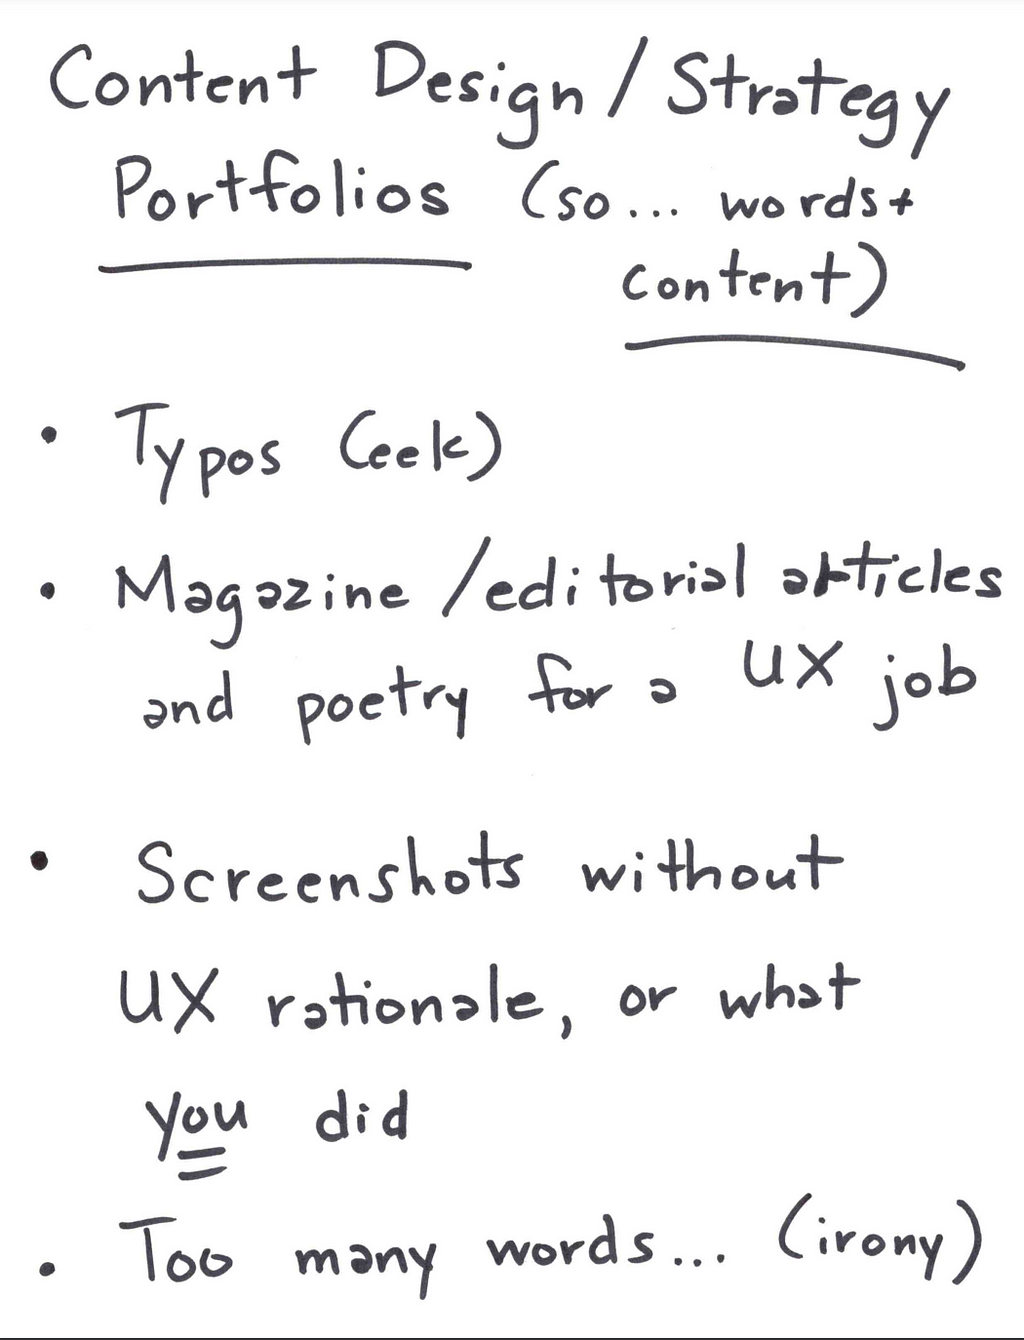 Common portfolio mistakes, including typos and vague project descriptions.